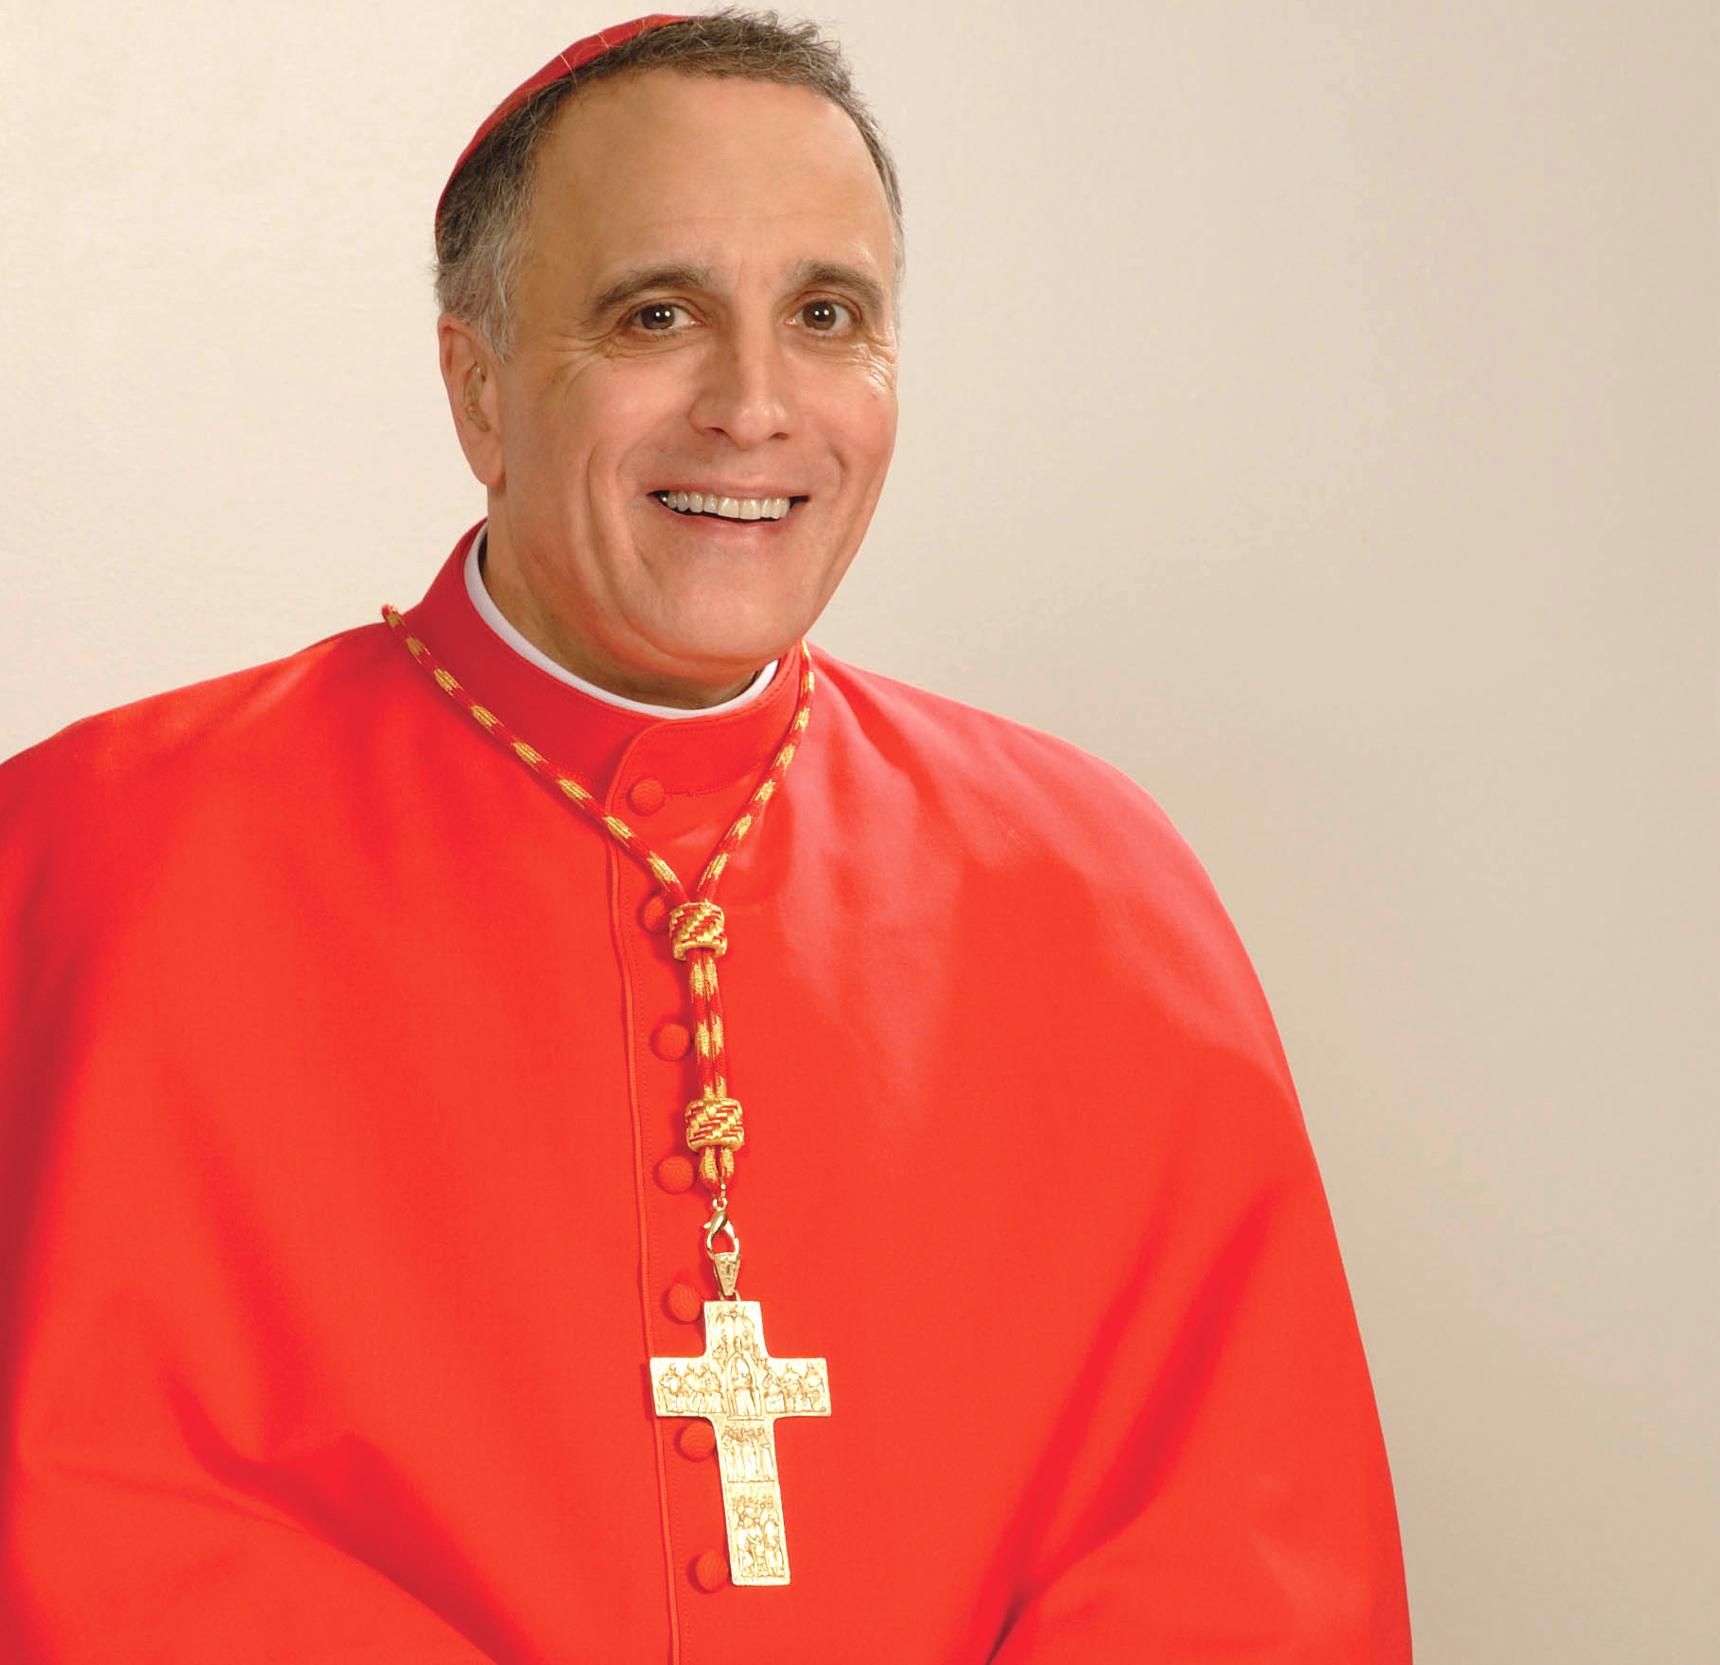 Cardinal Daniel DiNardo of Galveston-Houston, Texas